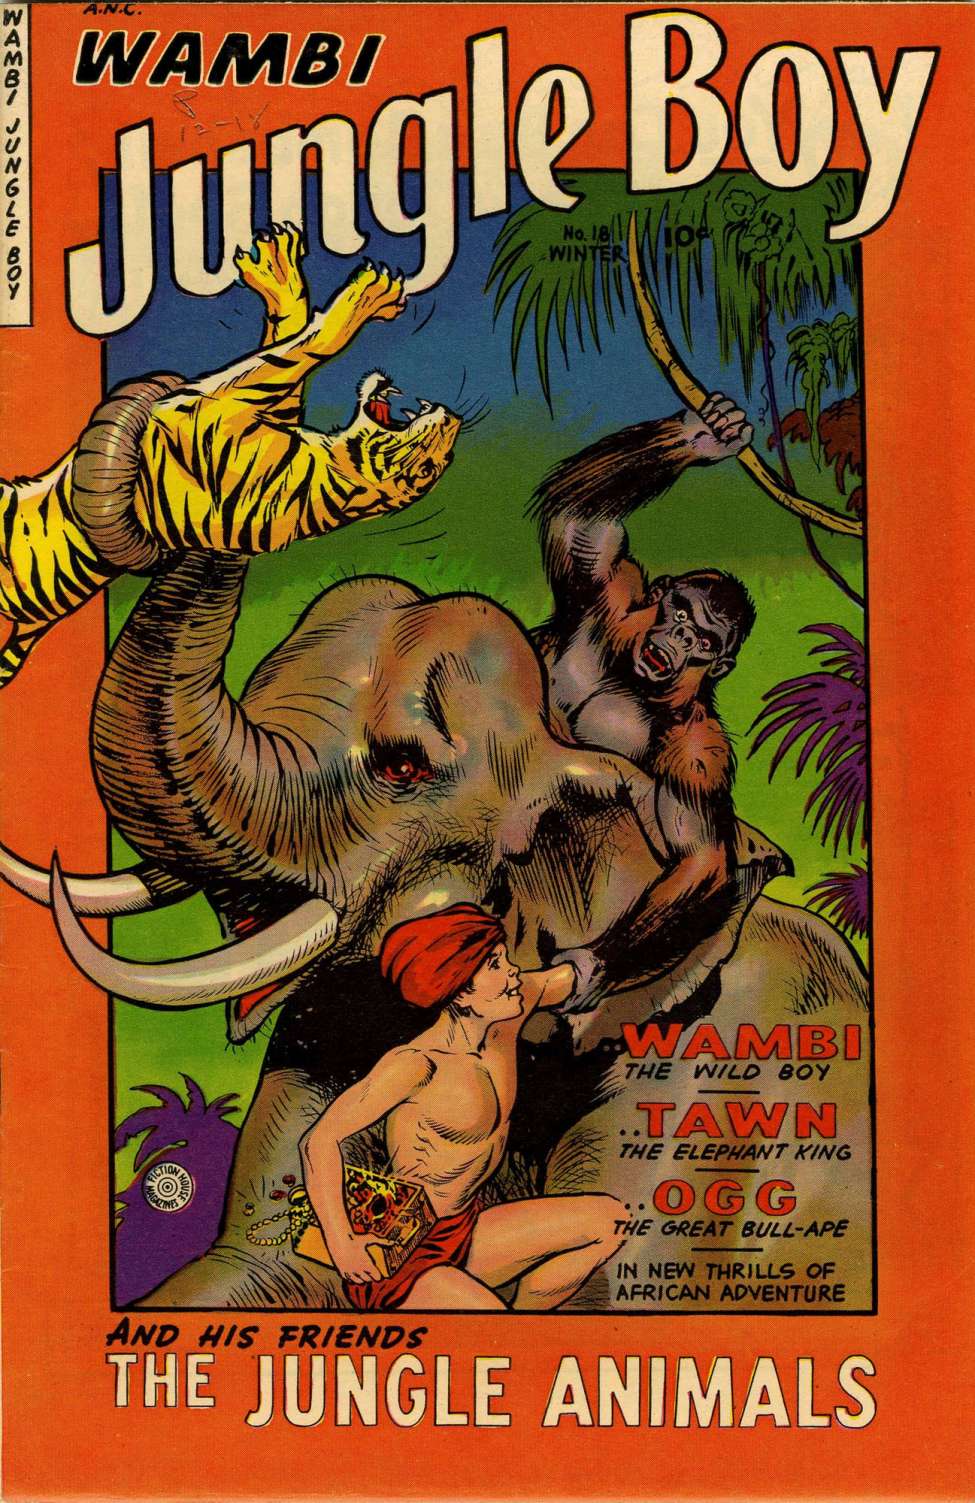 Book Cover For Wambi, Jungle Boy 18 (alt) - Version 2